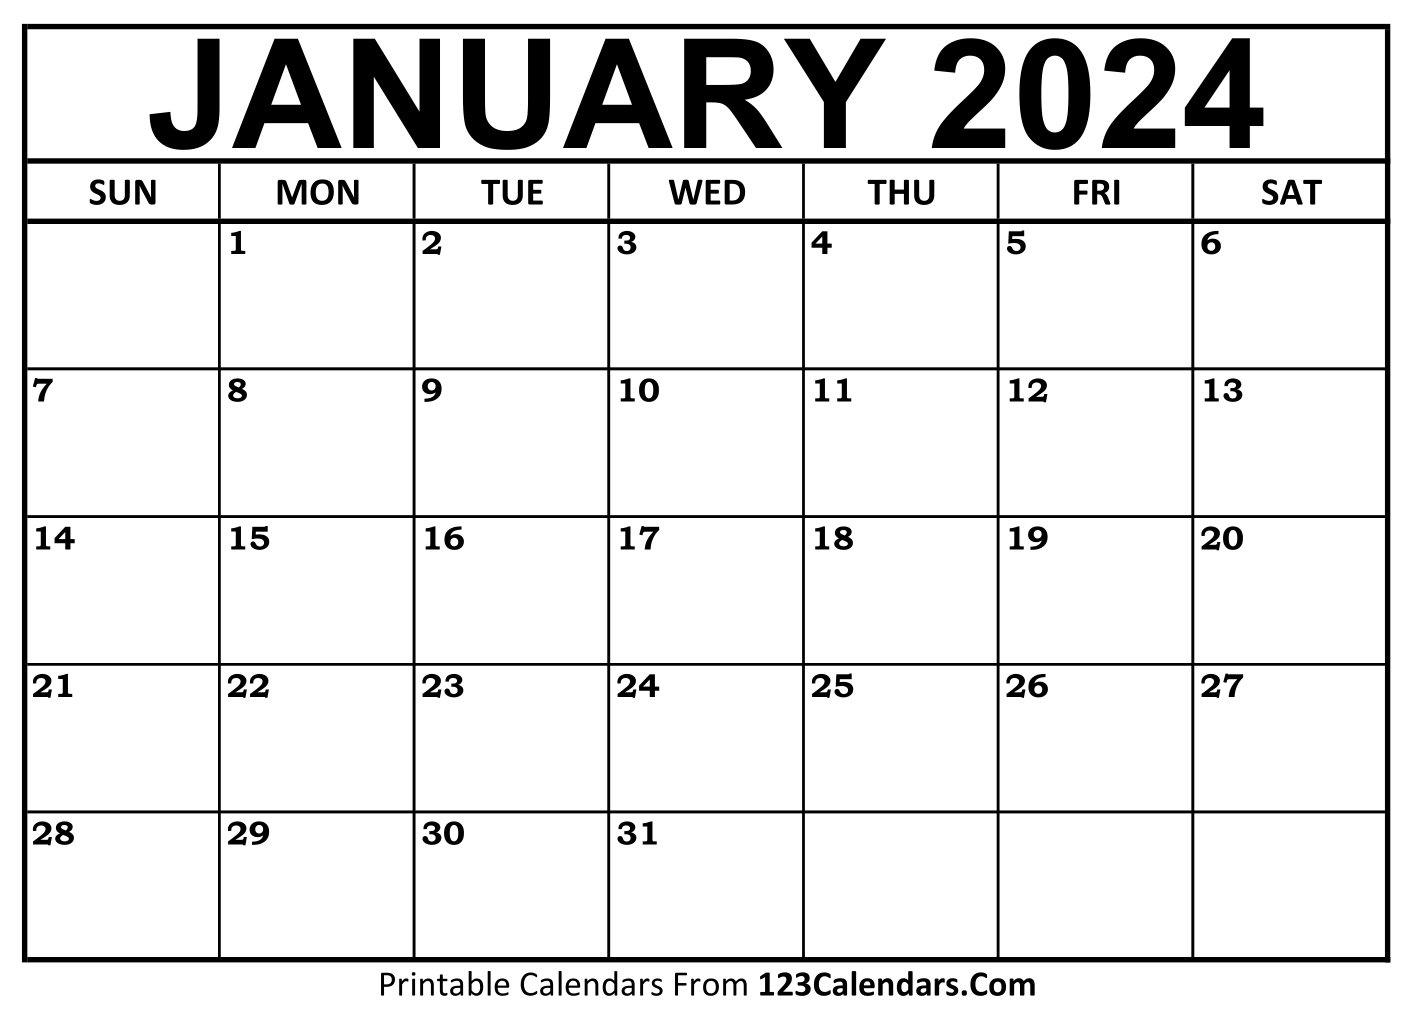 Printable January 2024 Calendar Templates - 123Calendars | Free Printable Calendar Templates 2024